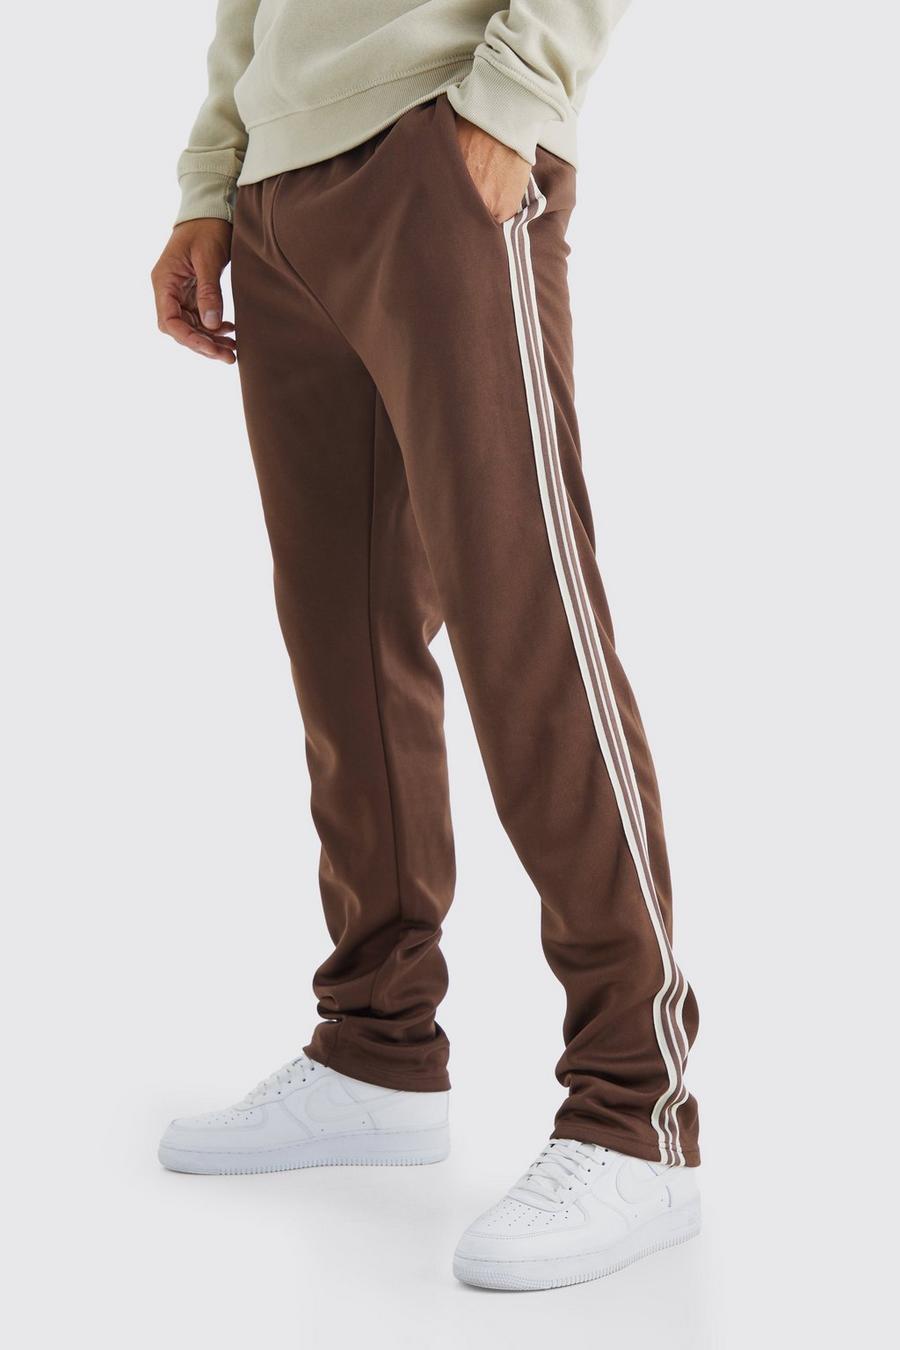 Pantalón deportivo Tall de tejido por urdimbre con franja lateral, Coffee marrone